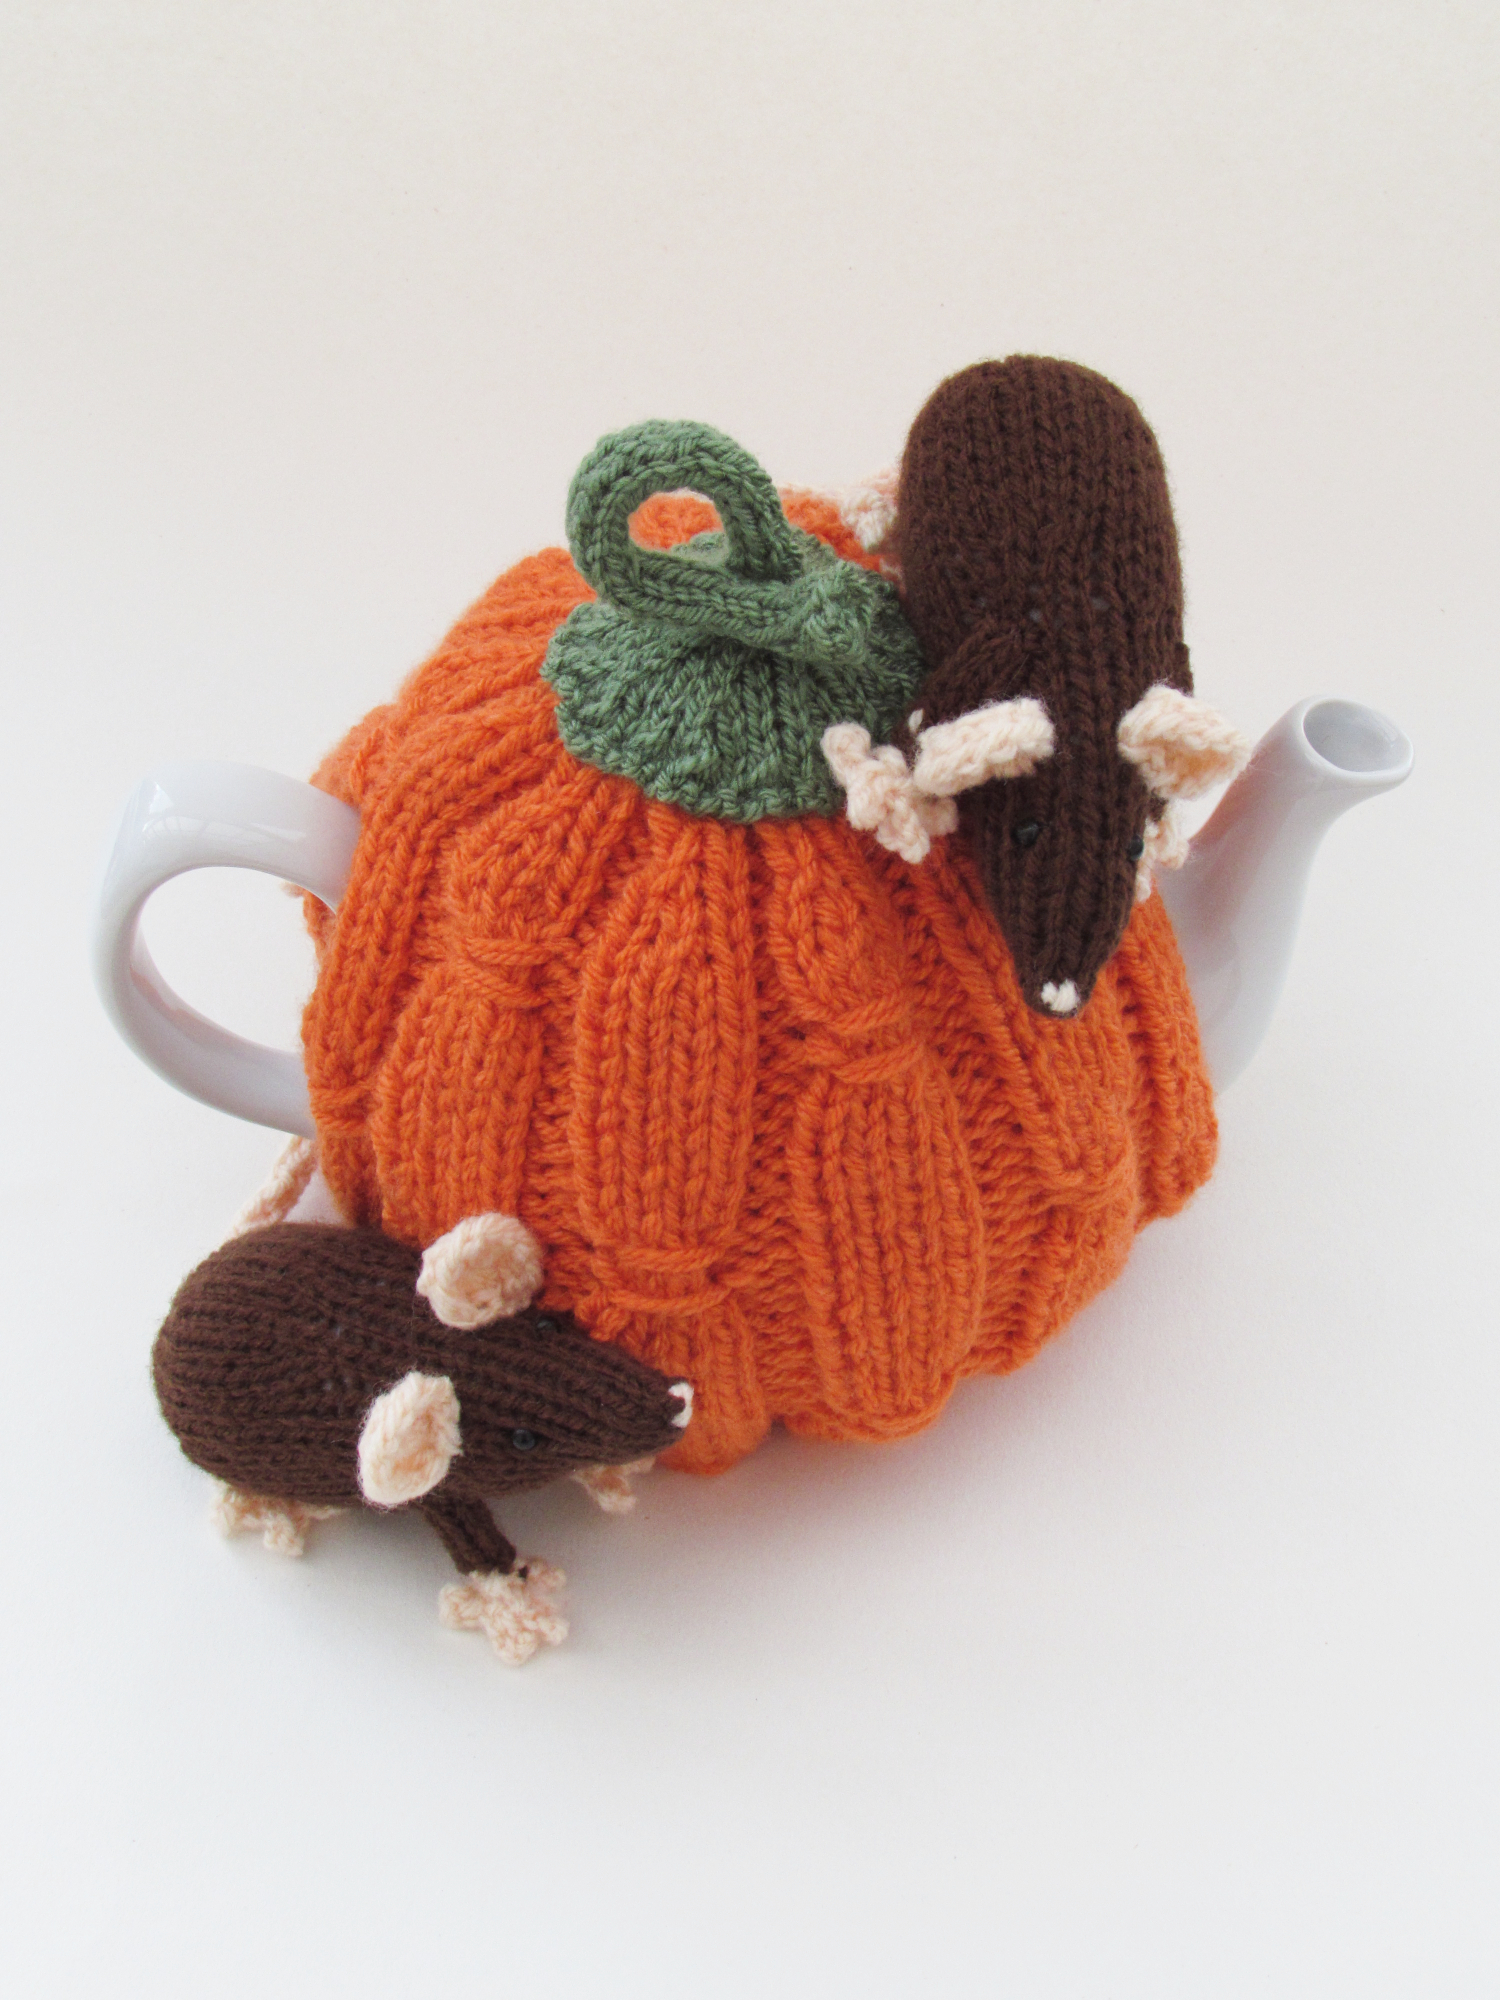 Harvest Pumpkin knitting pattern